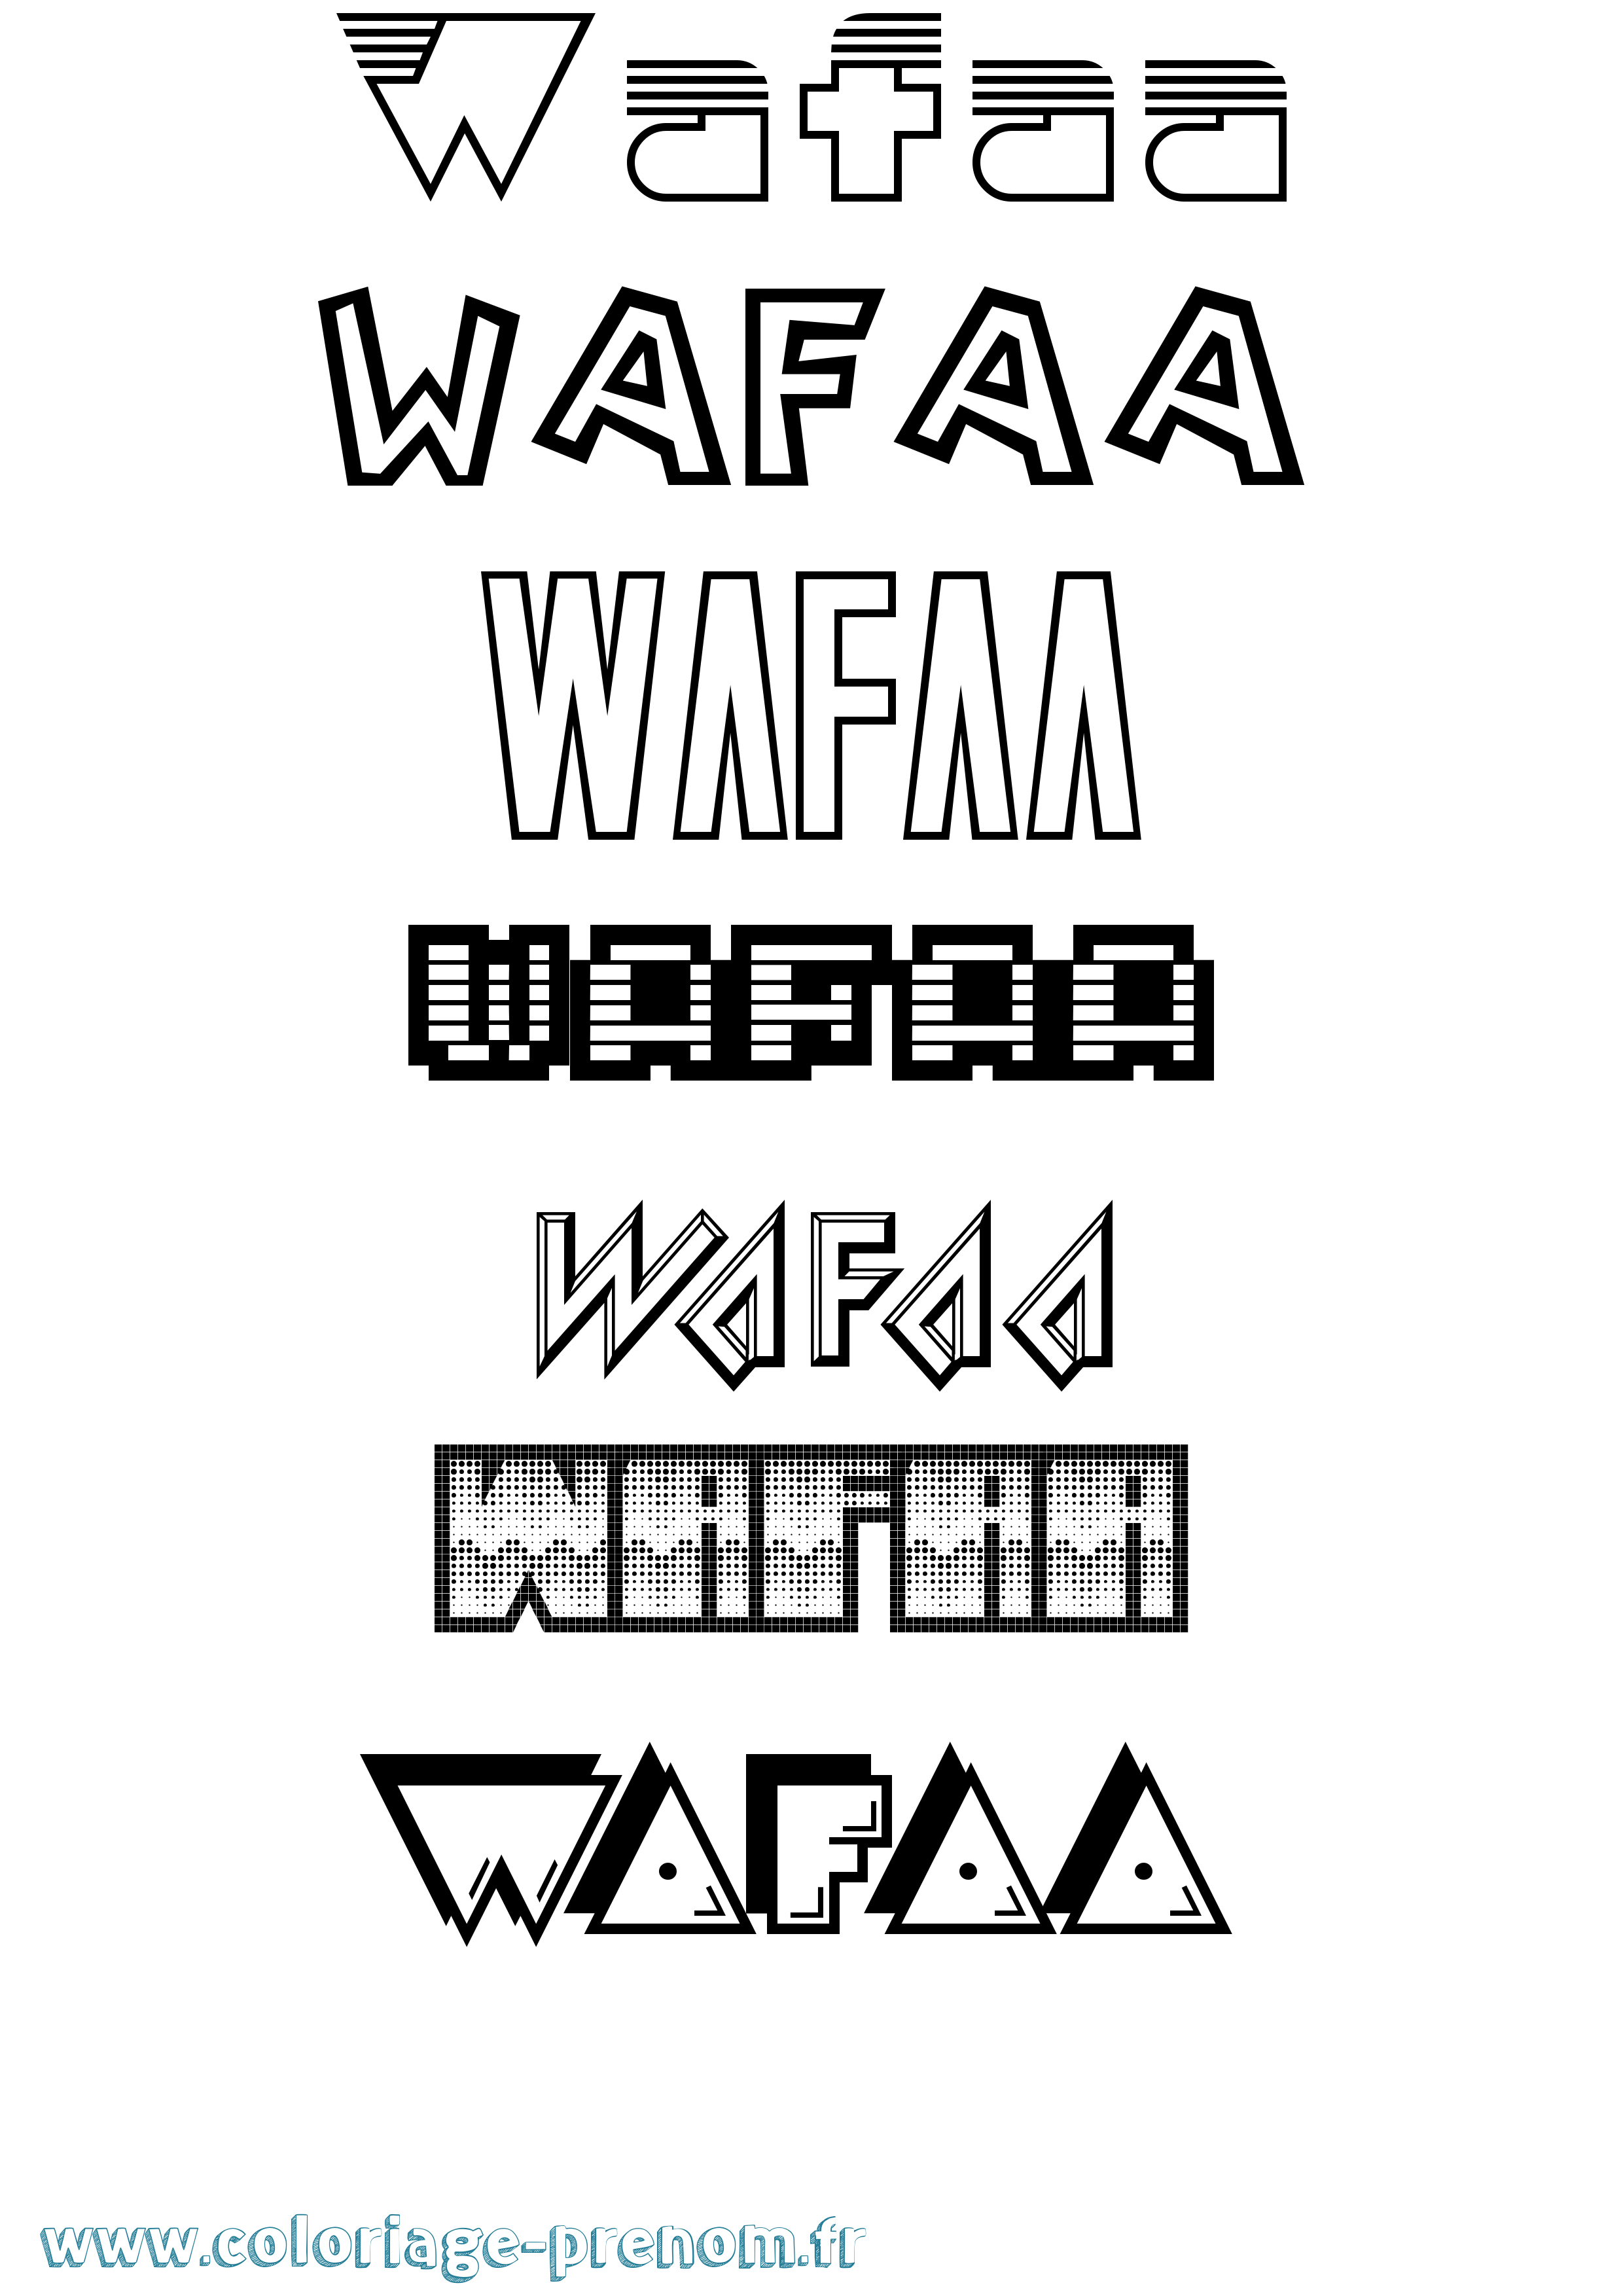 Coloriage prénom Wafaa Jeux Vidéos